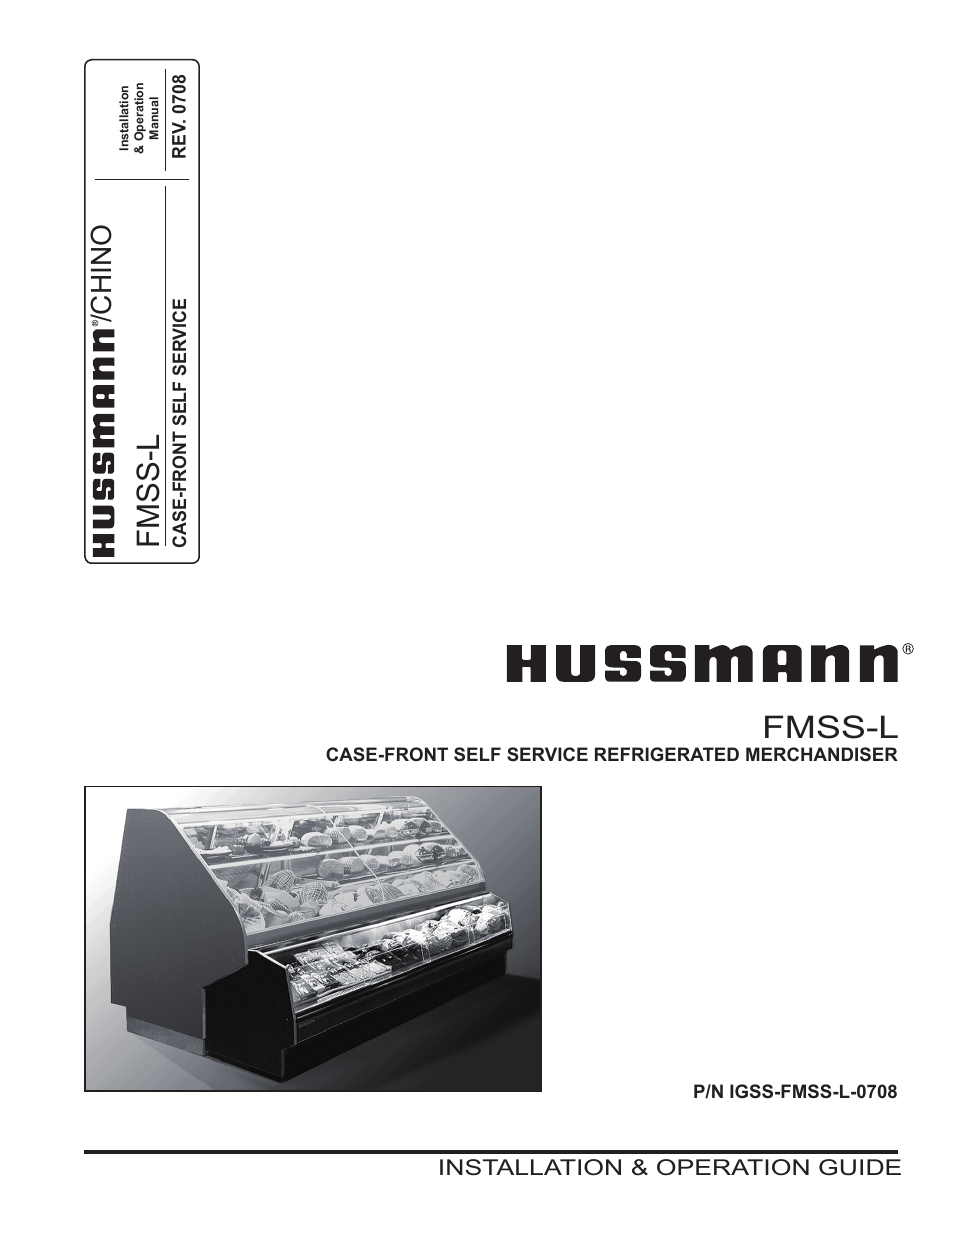 hussmann FMSS-L User Manual | 25 pages